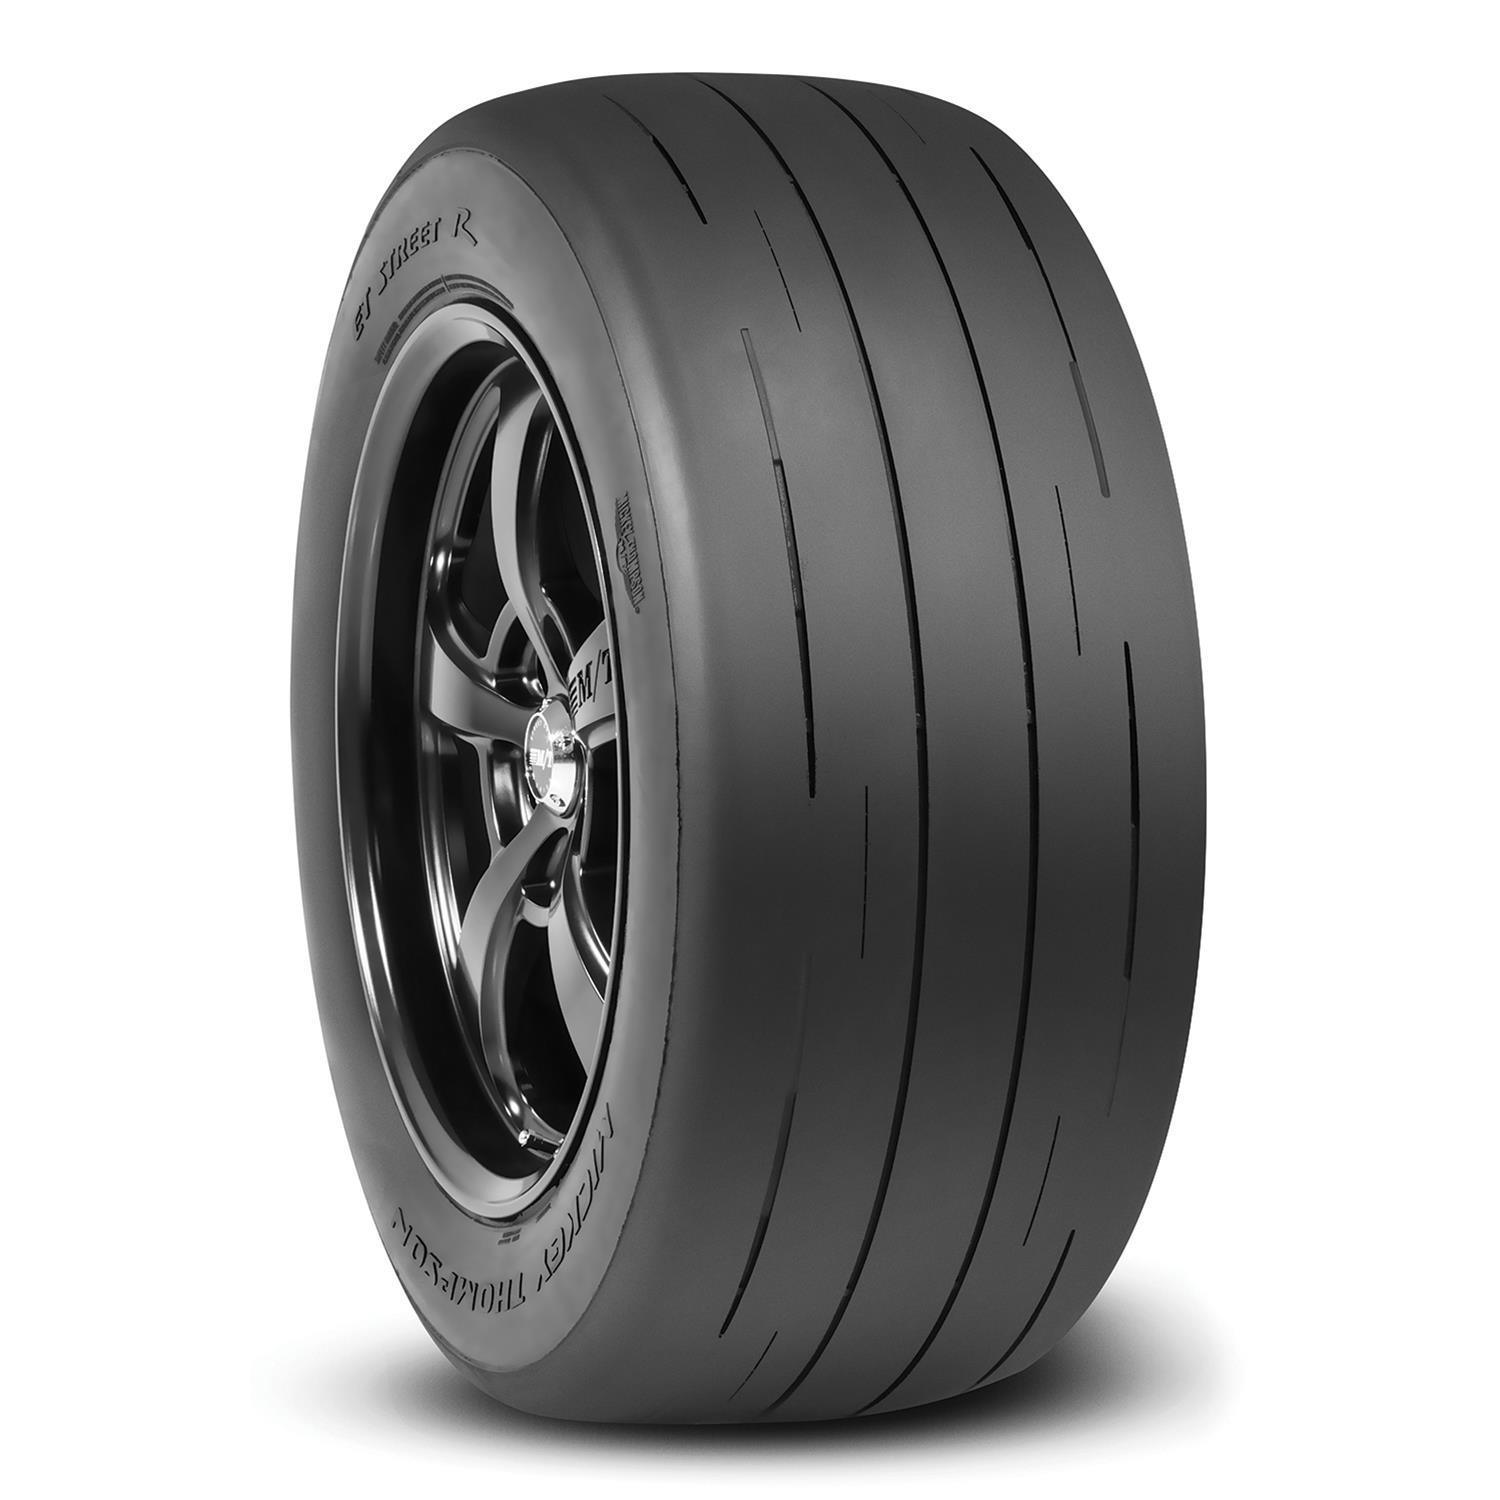 315/50R17 ET Street R Tire - Burlile Performance Products